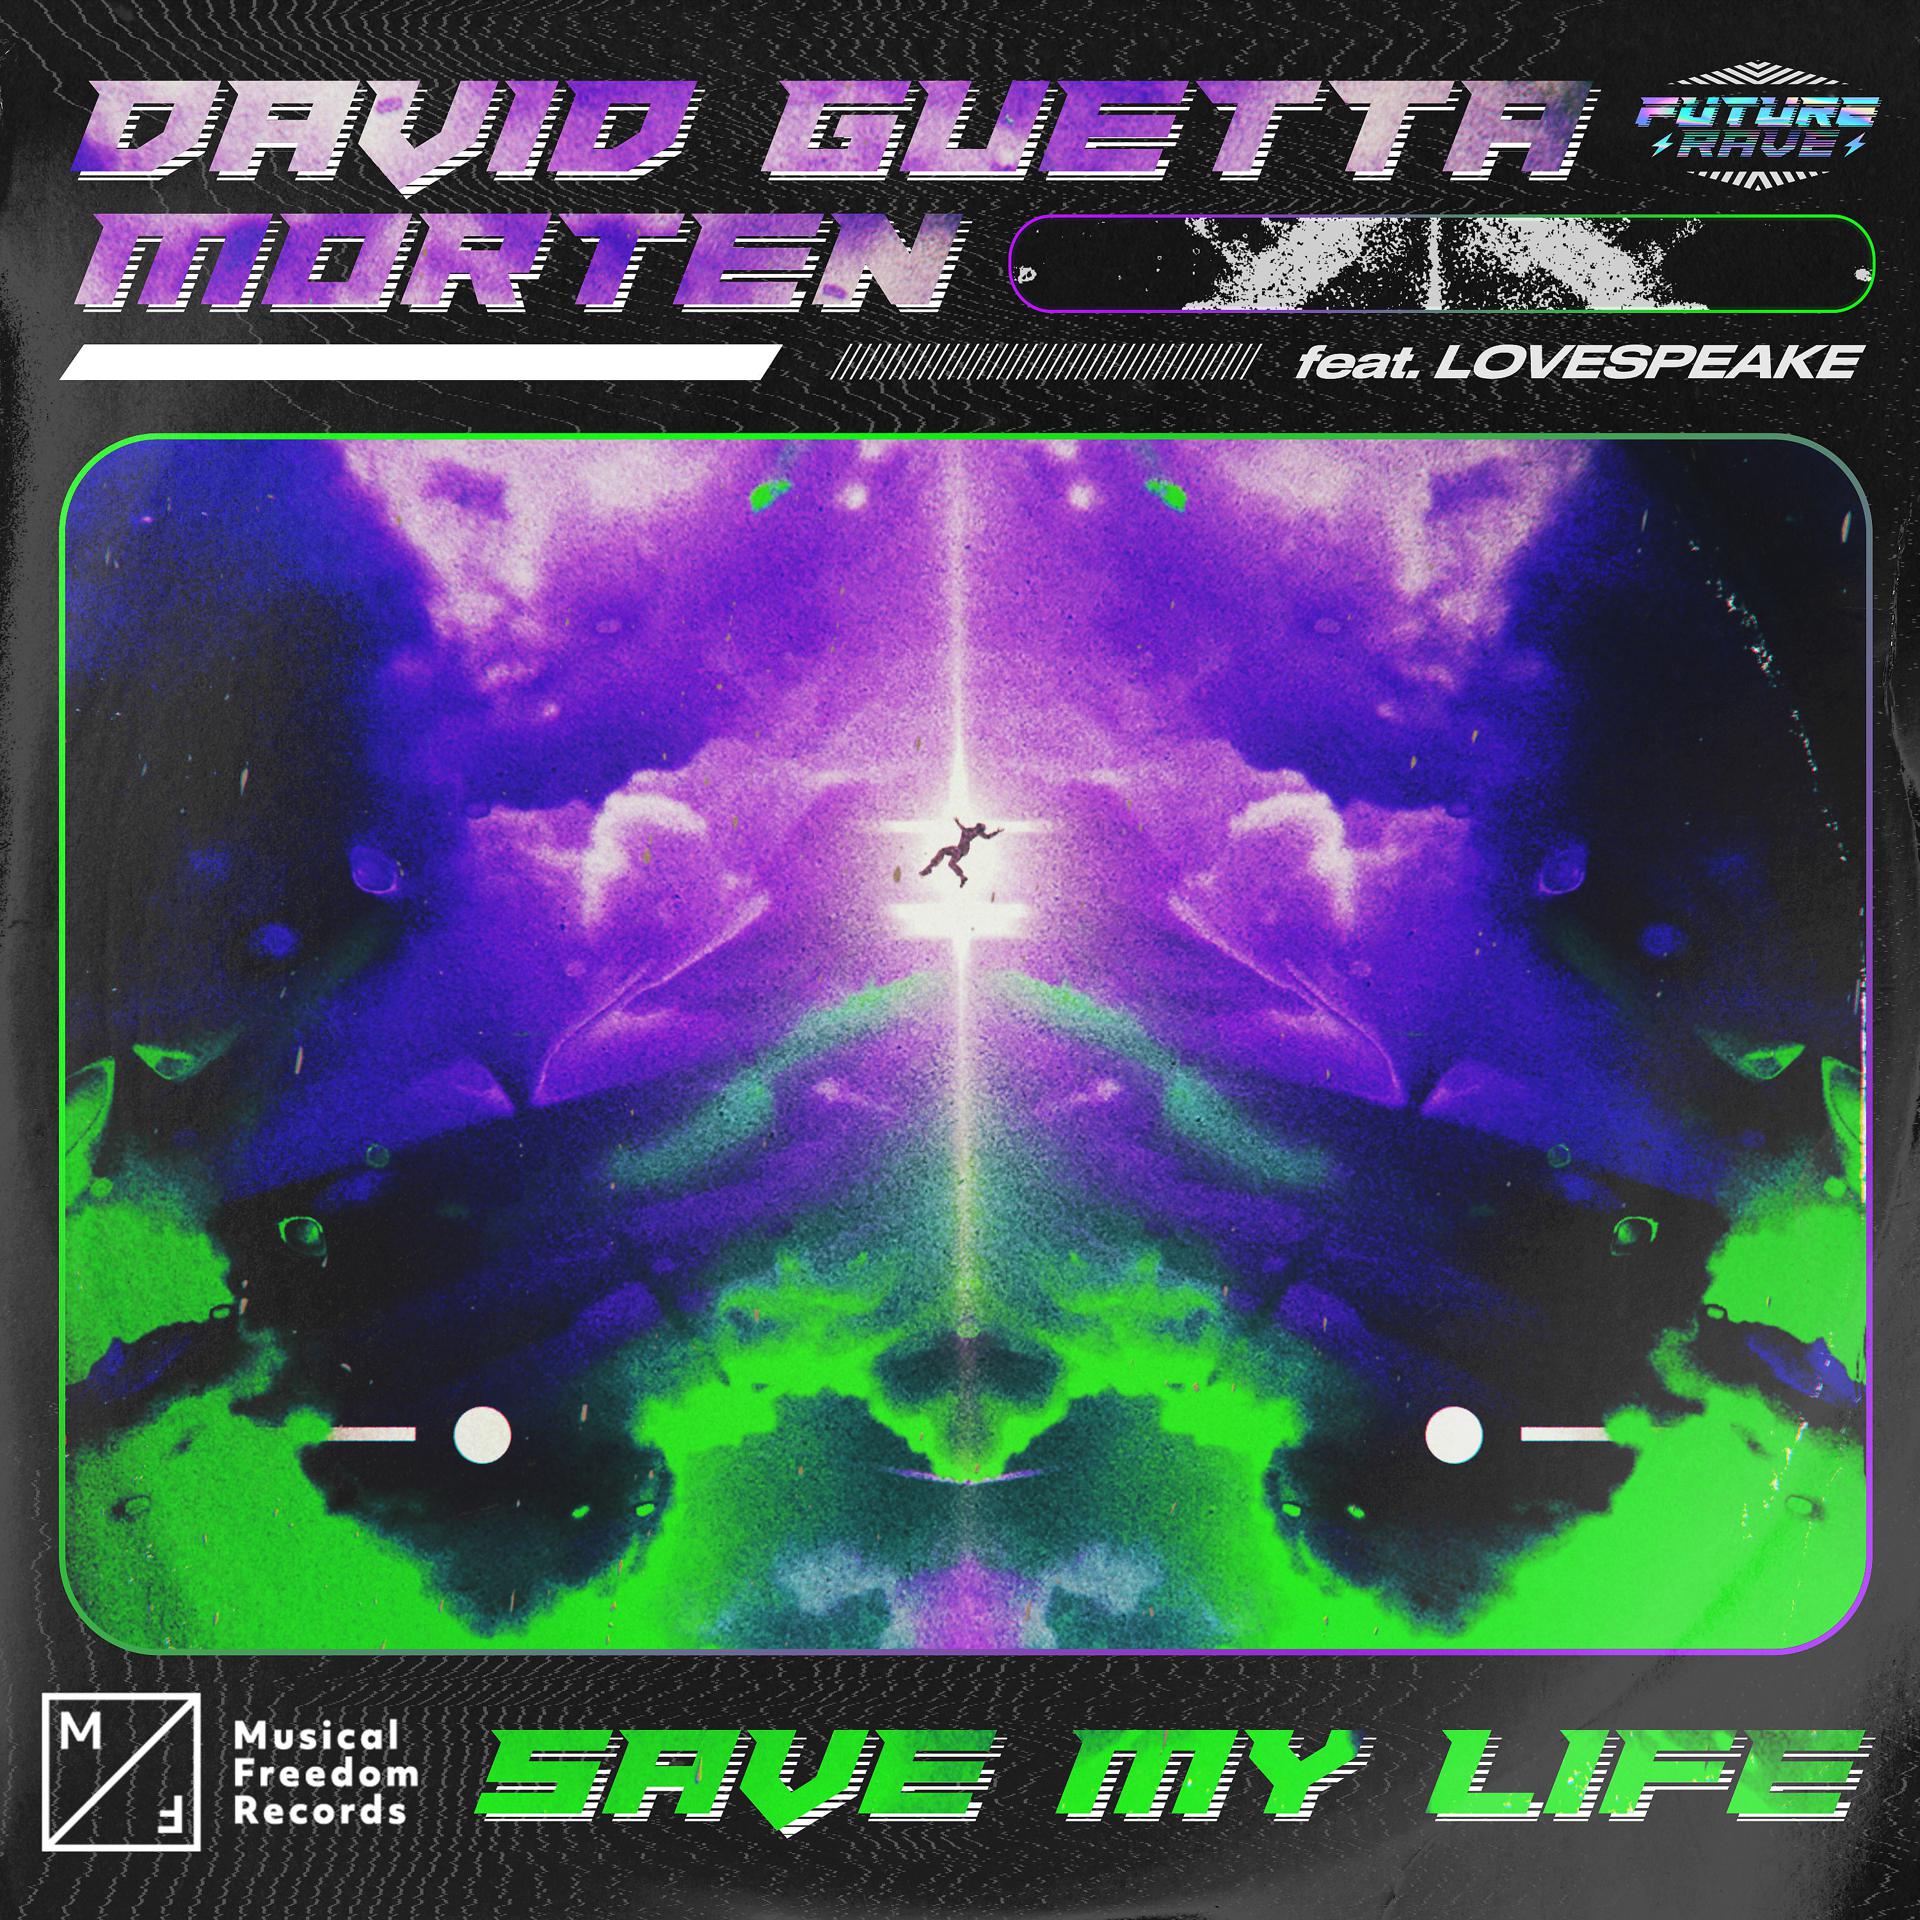 David Guetta x Morten Lovespeak save my Life Extended. Save my Life. Lovespeake певец. David Guetta Pop Life album. Dreams extended david guetta morten feat